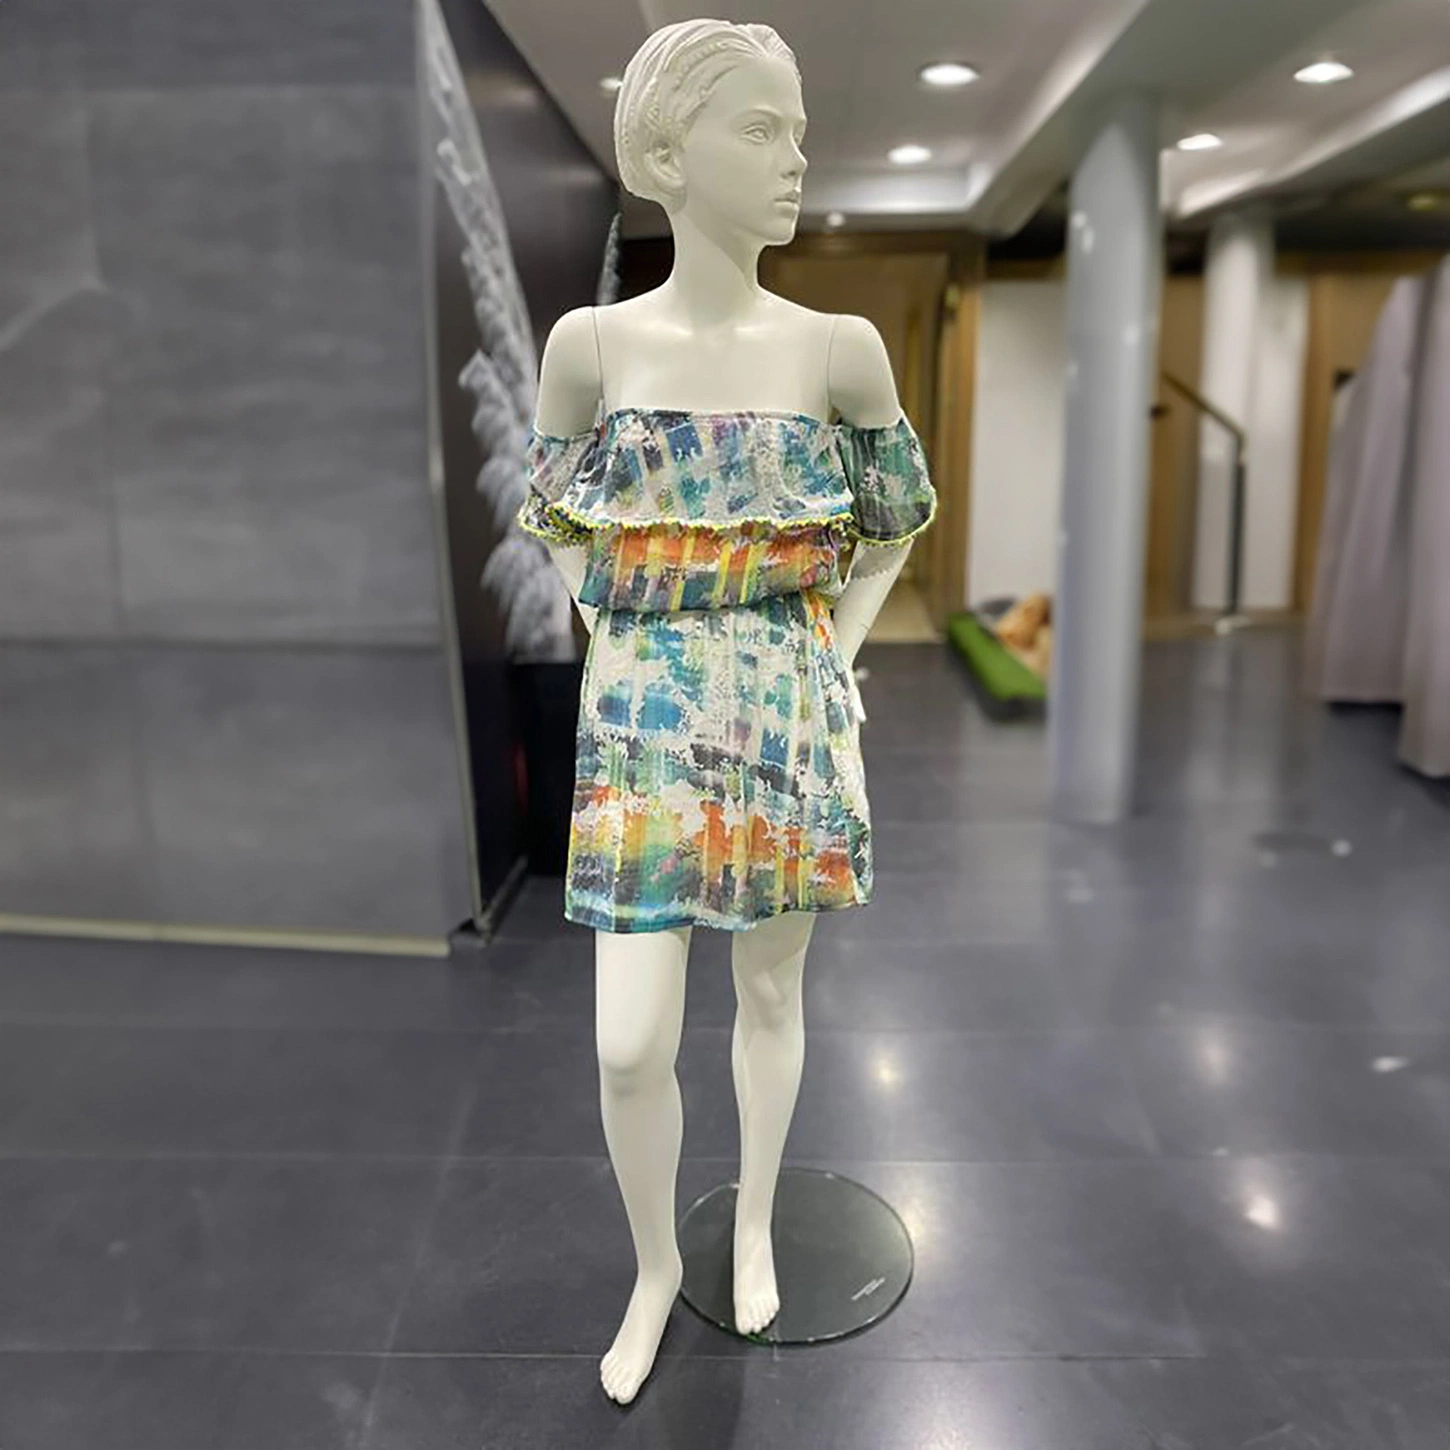 Adaptable Fiberglass Mannequins for Diverse Fashion Presentations